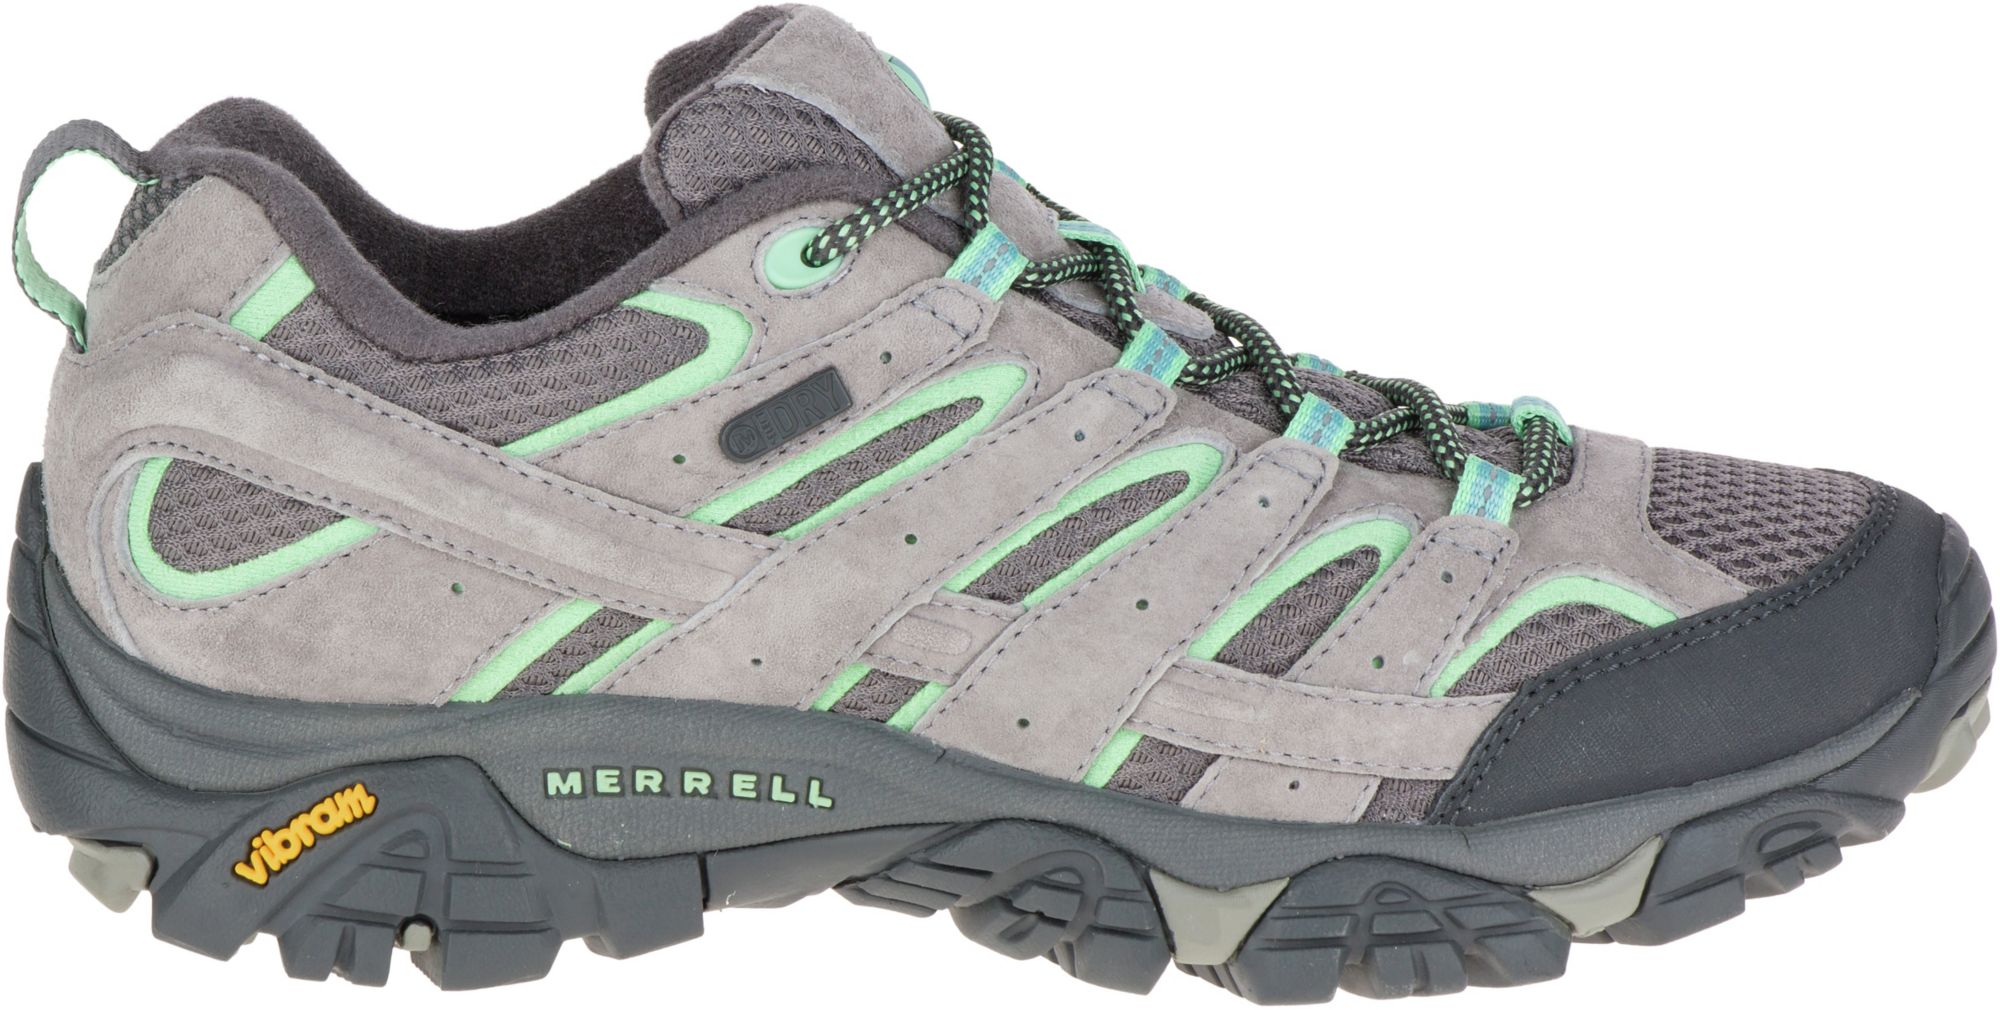 Merrell Women's Moab 2 Waterproof Hiking Shoes | DICK'S Sporting Goods